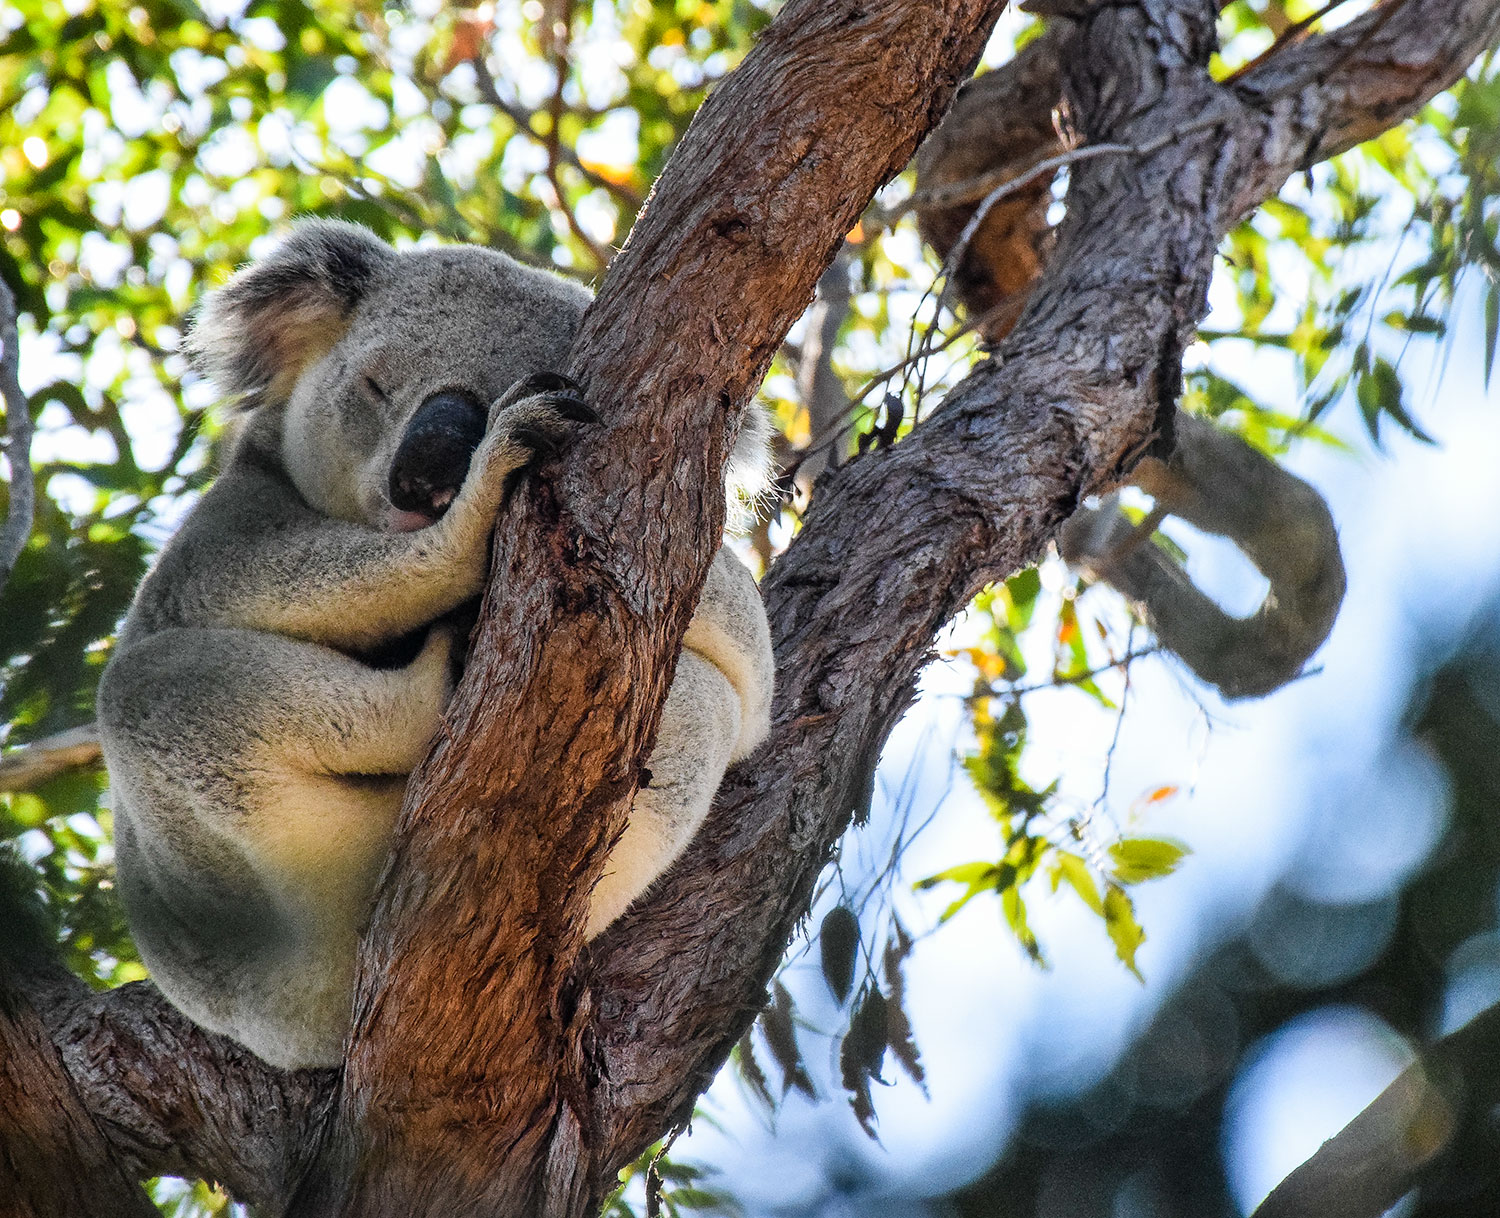 Animaux en australie : koala sauvage magnetic island